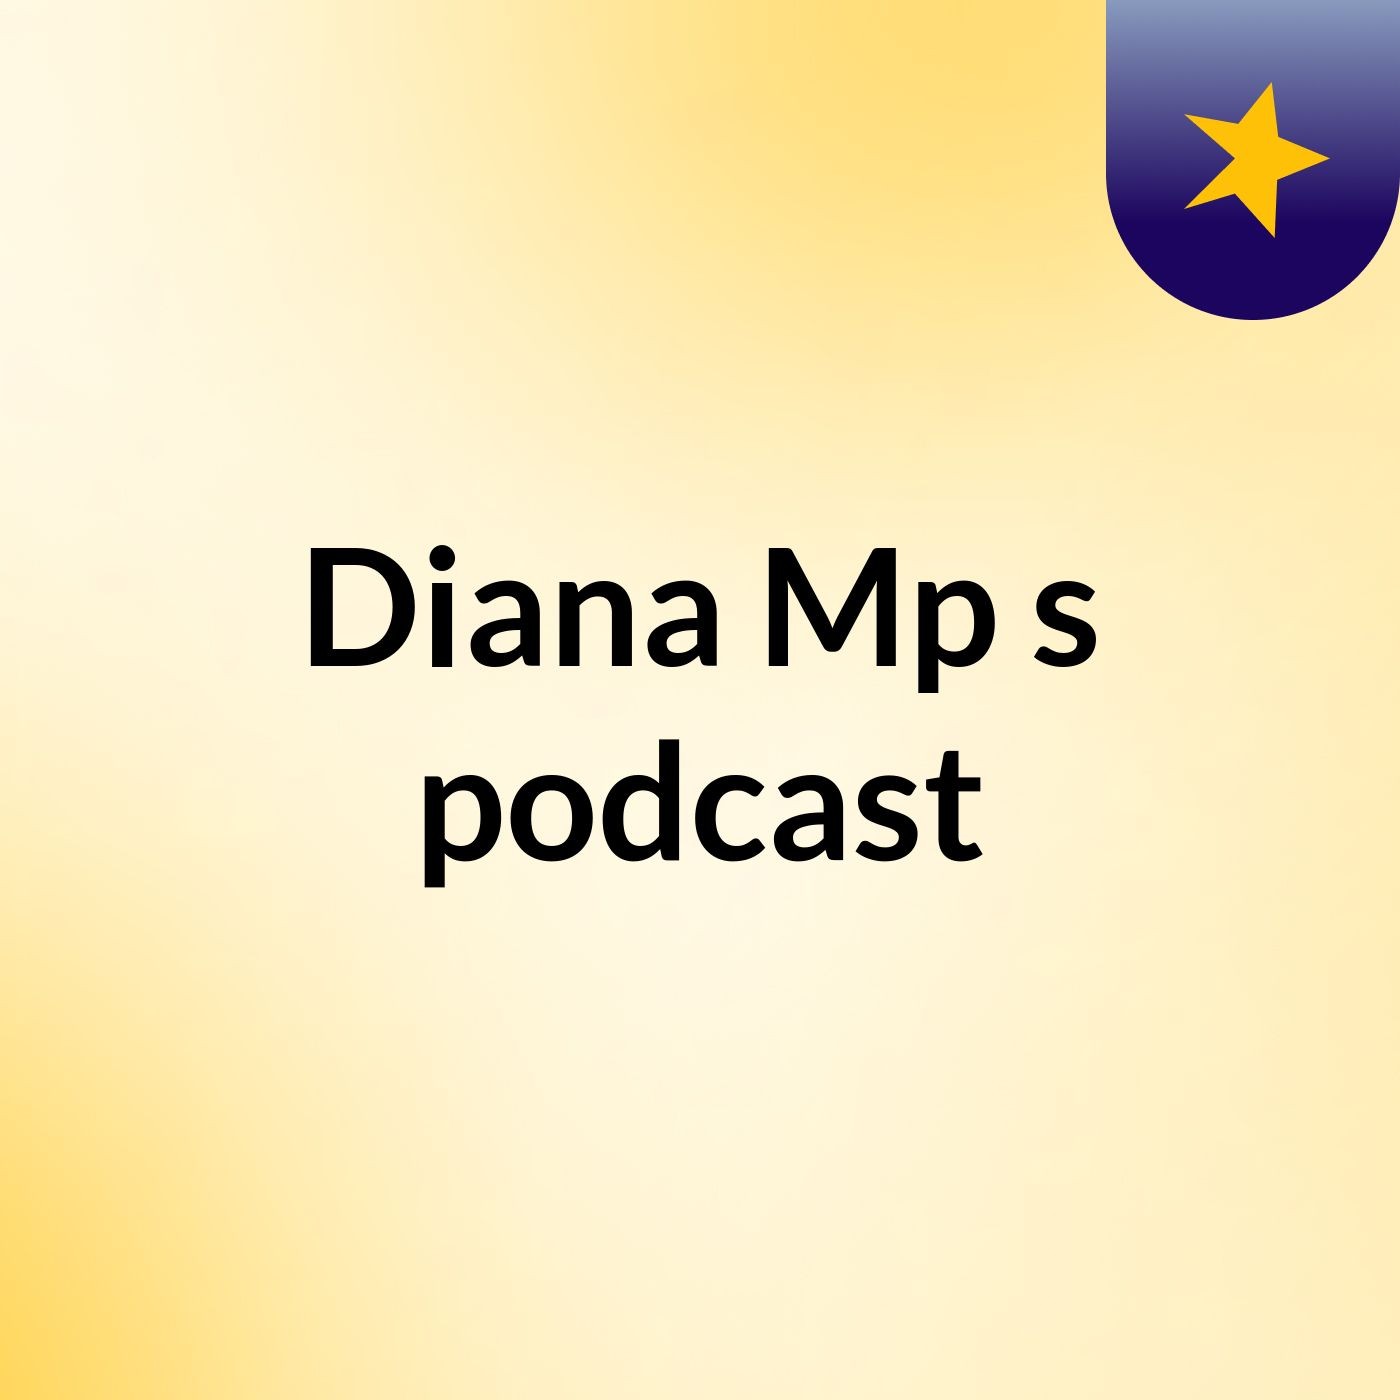 Diana Mp's podcast